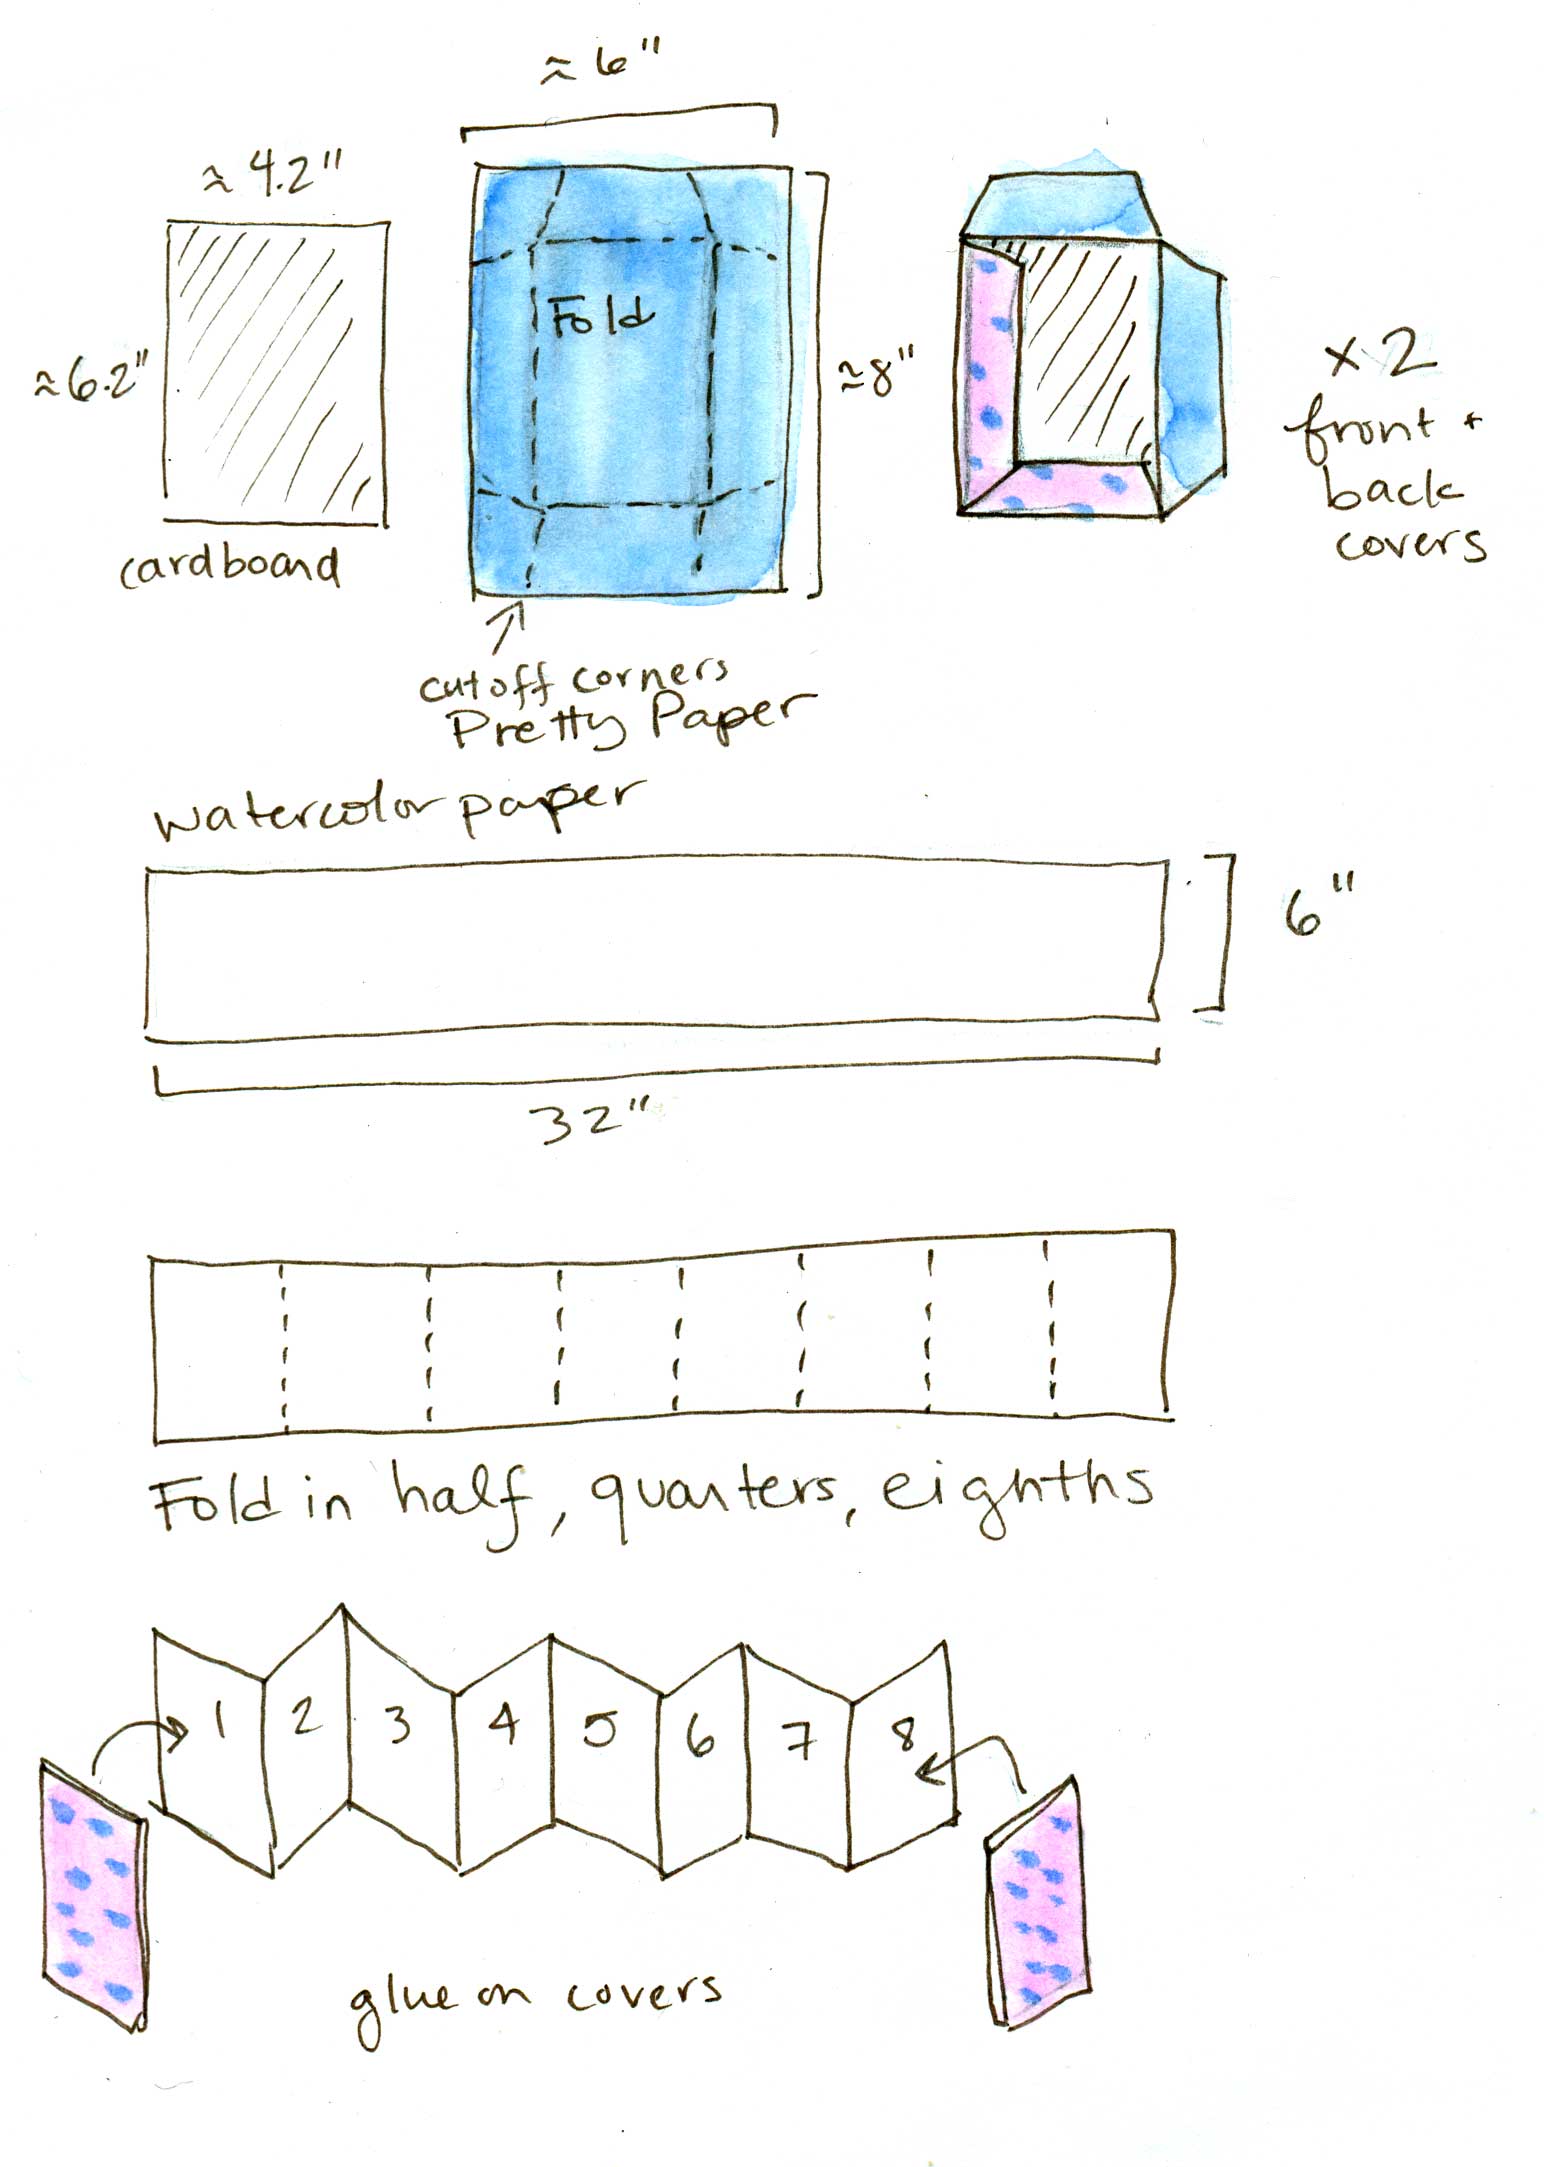 BUDGET FRIENDLY DIY MINI WATERCOLOR SKETCHBOOK, how to make watercolor  sketchbook